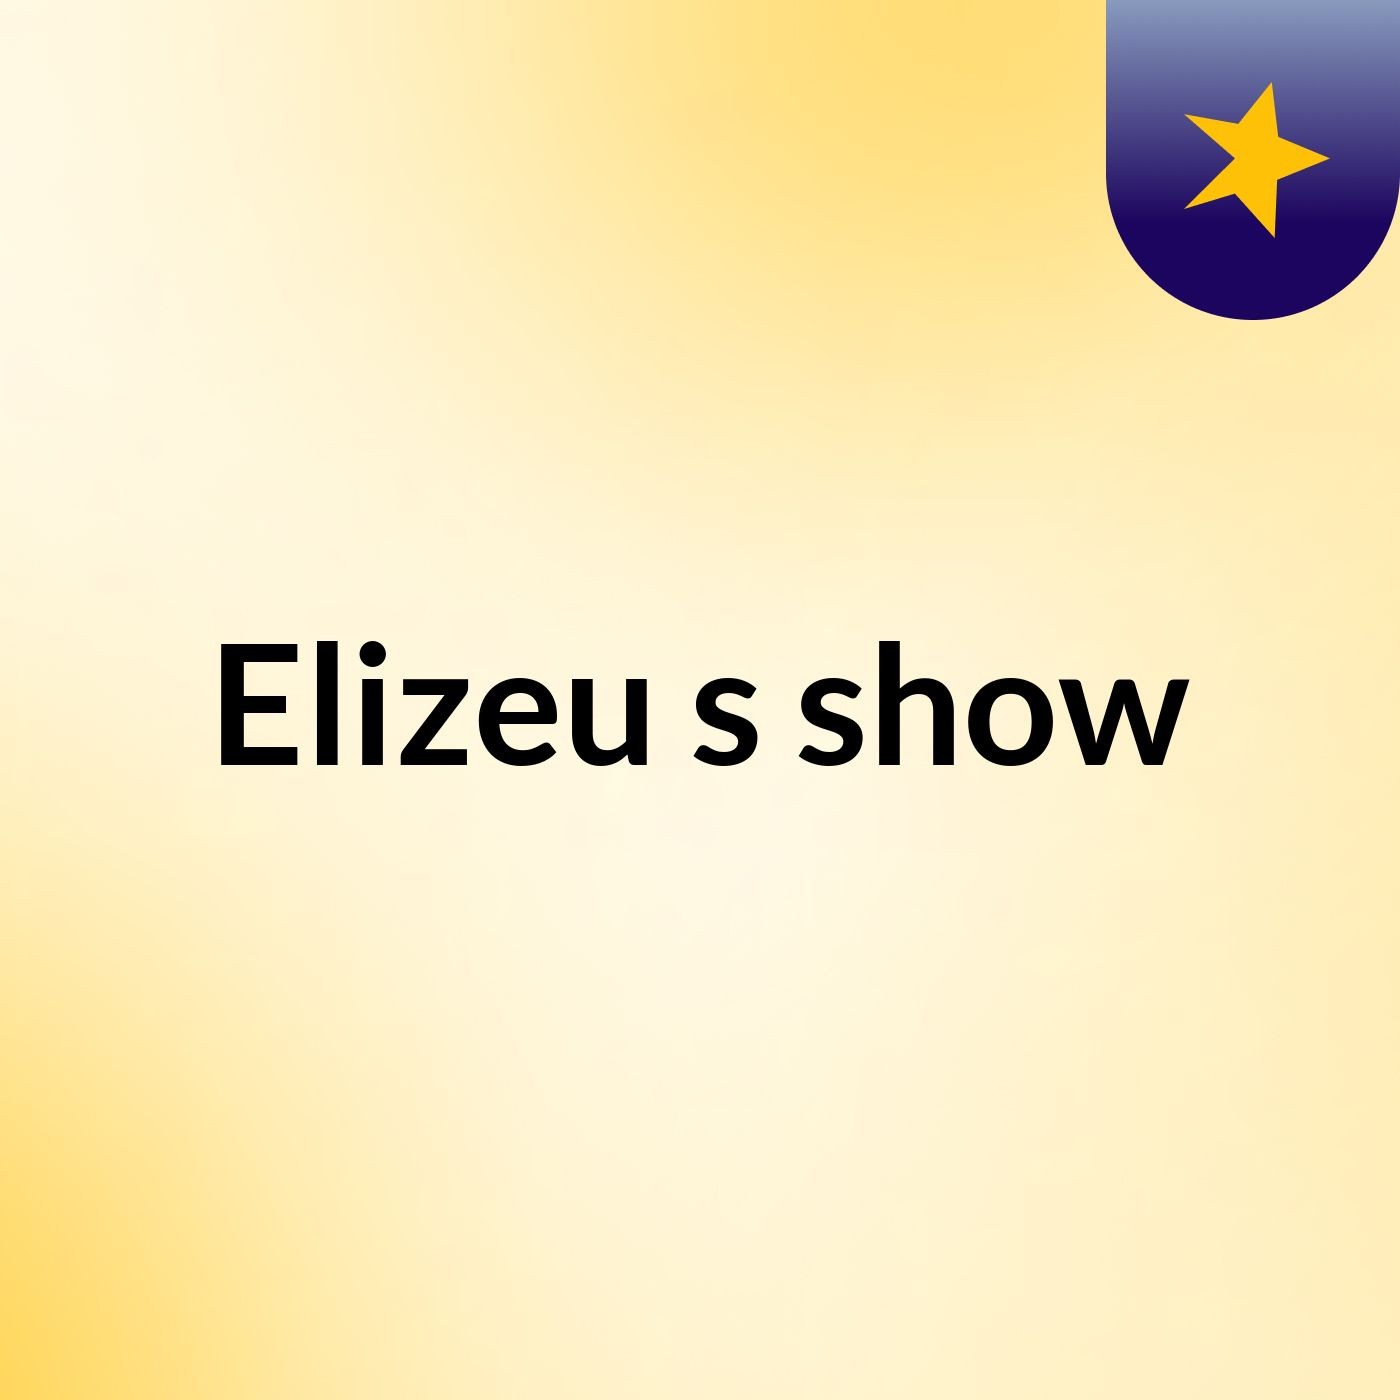 Elizeu's show